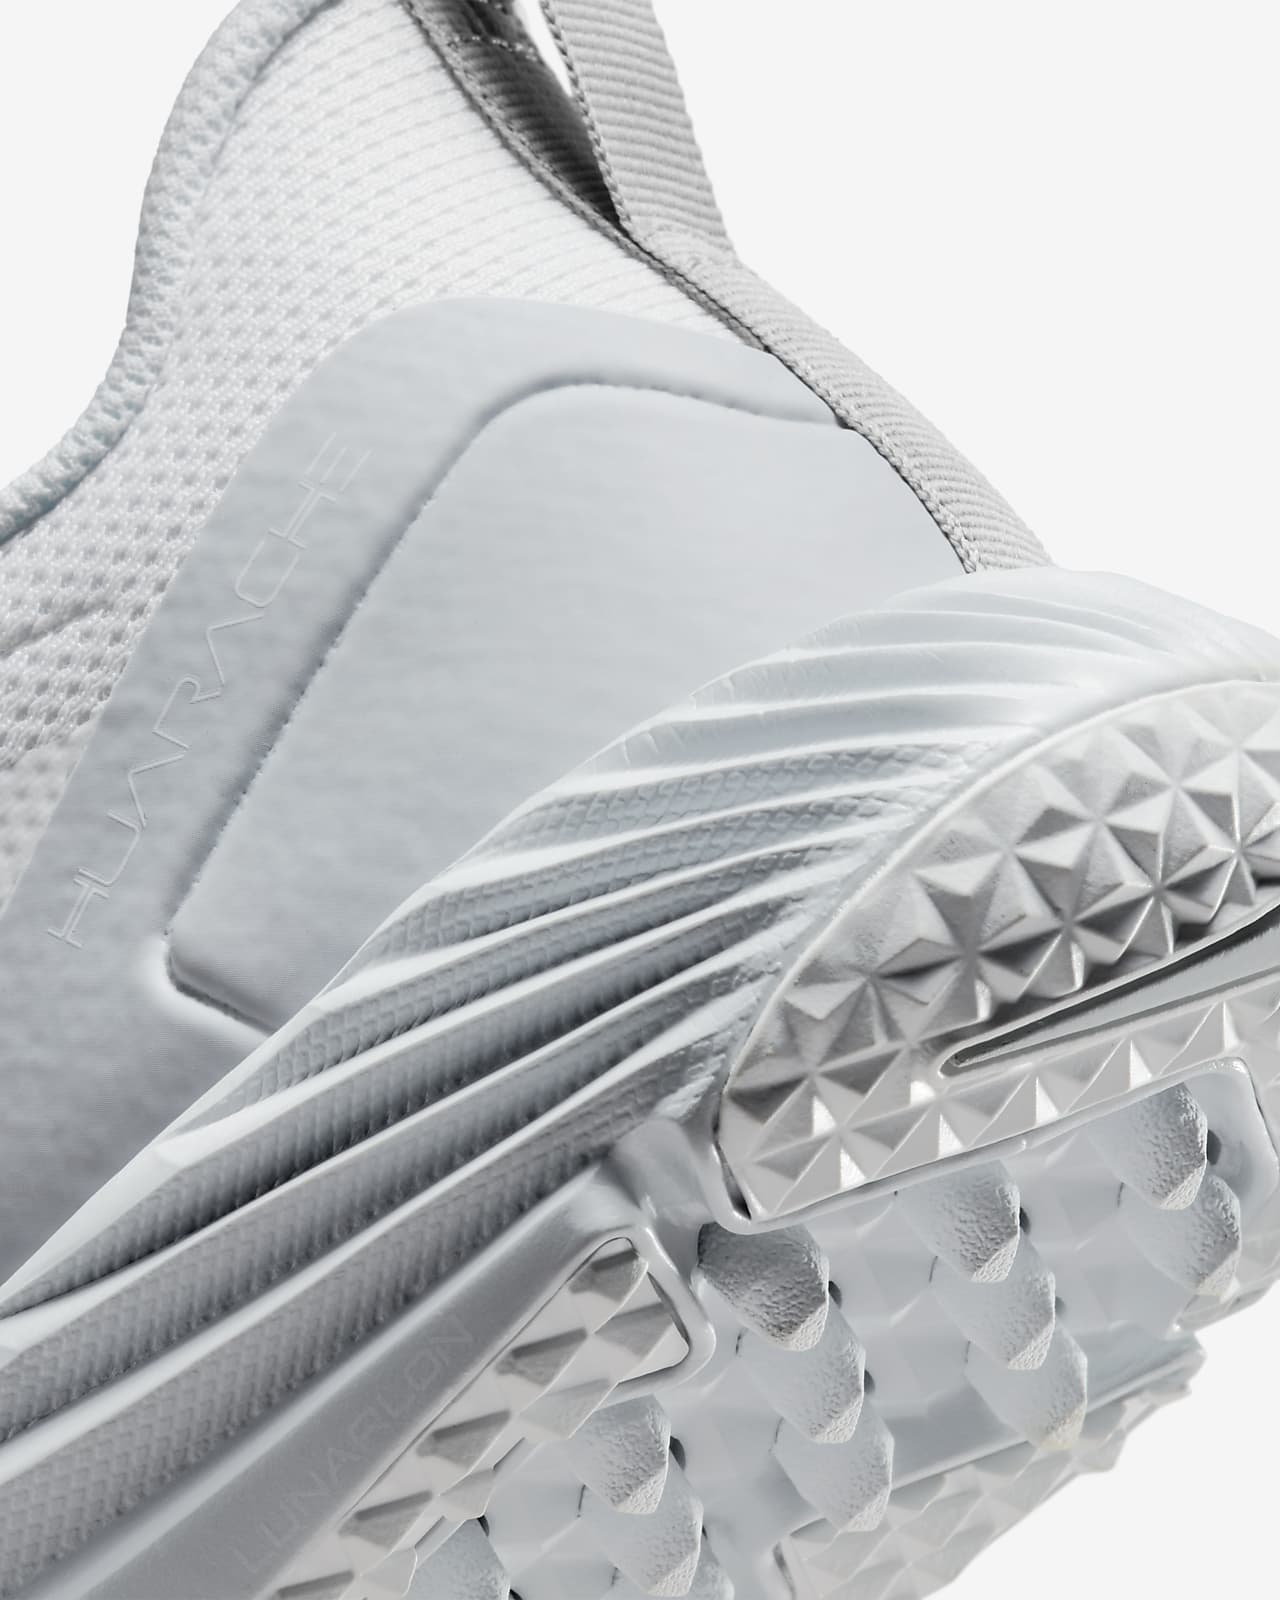 Nike Alpha Huarache 7 Pro Lacrosse Cleats Size 10.5